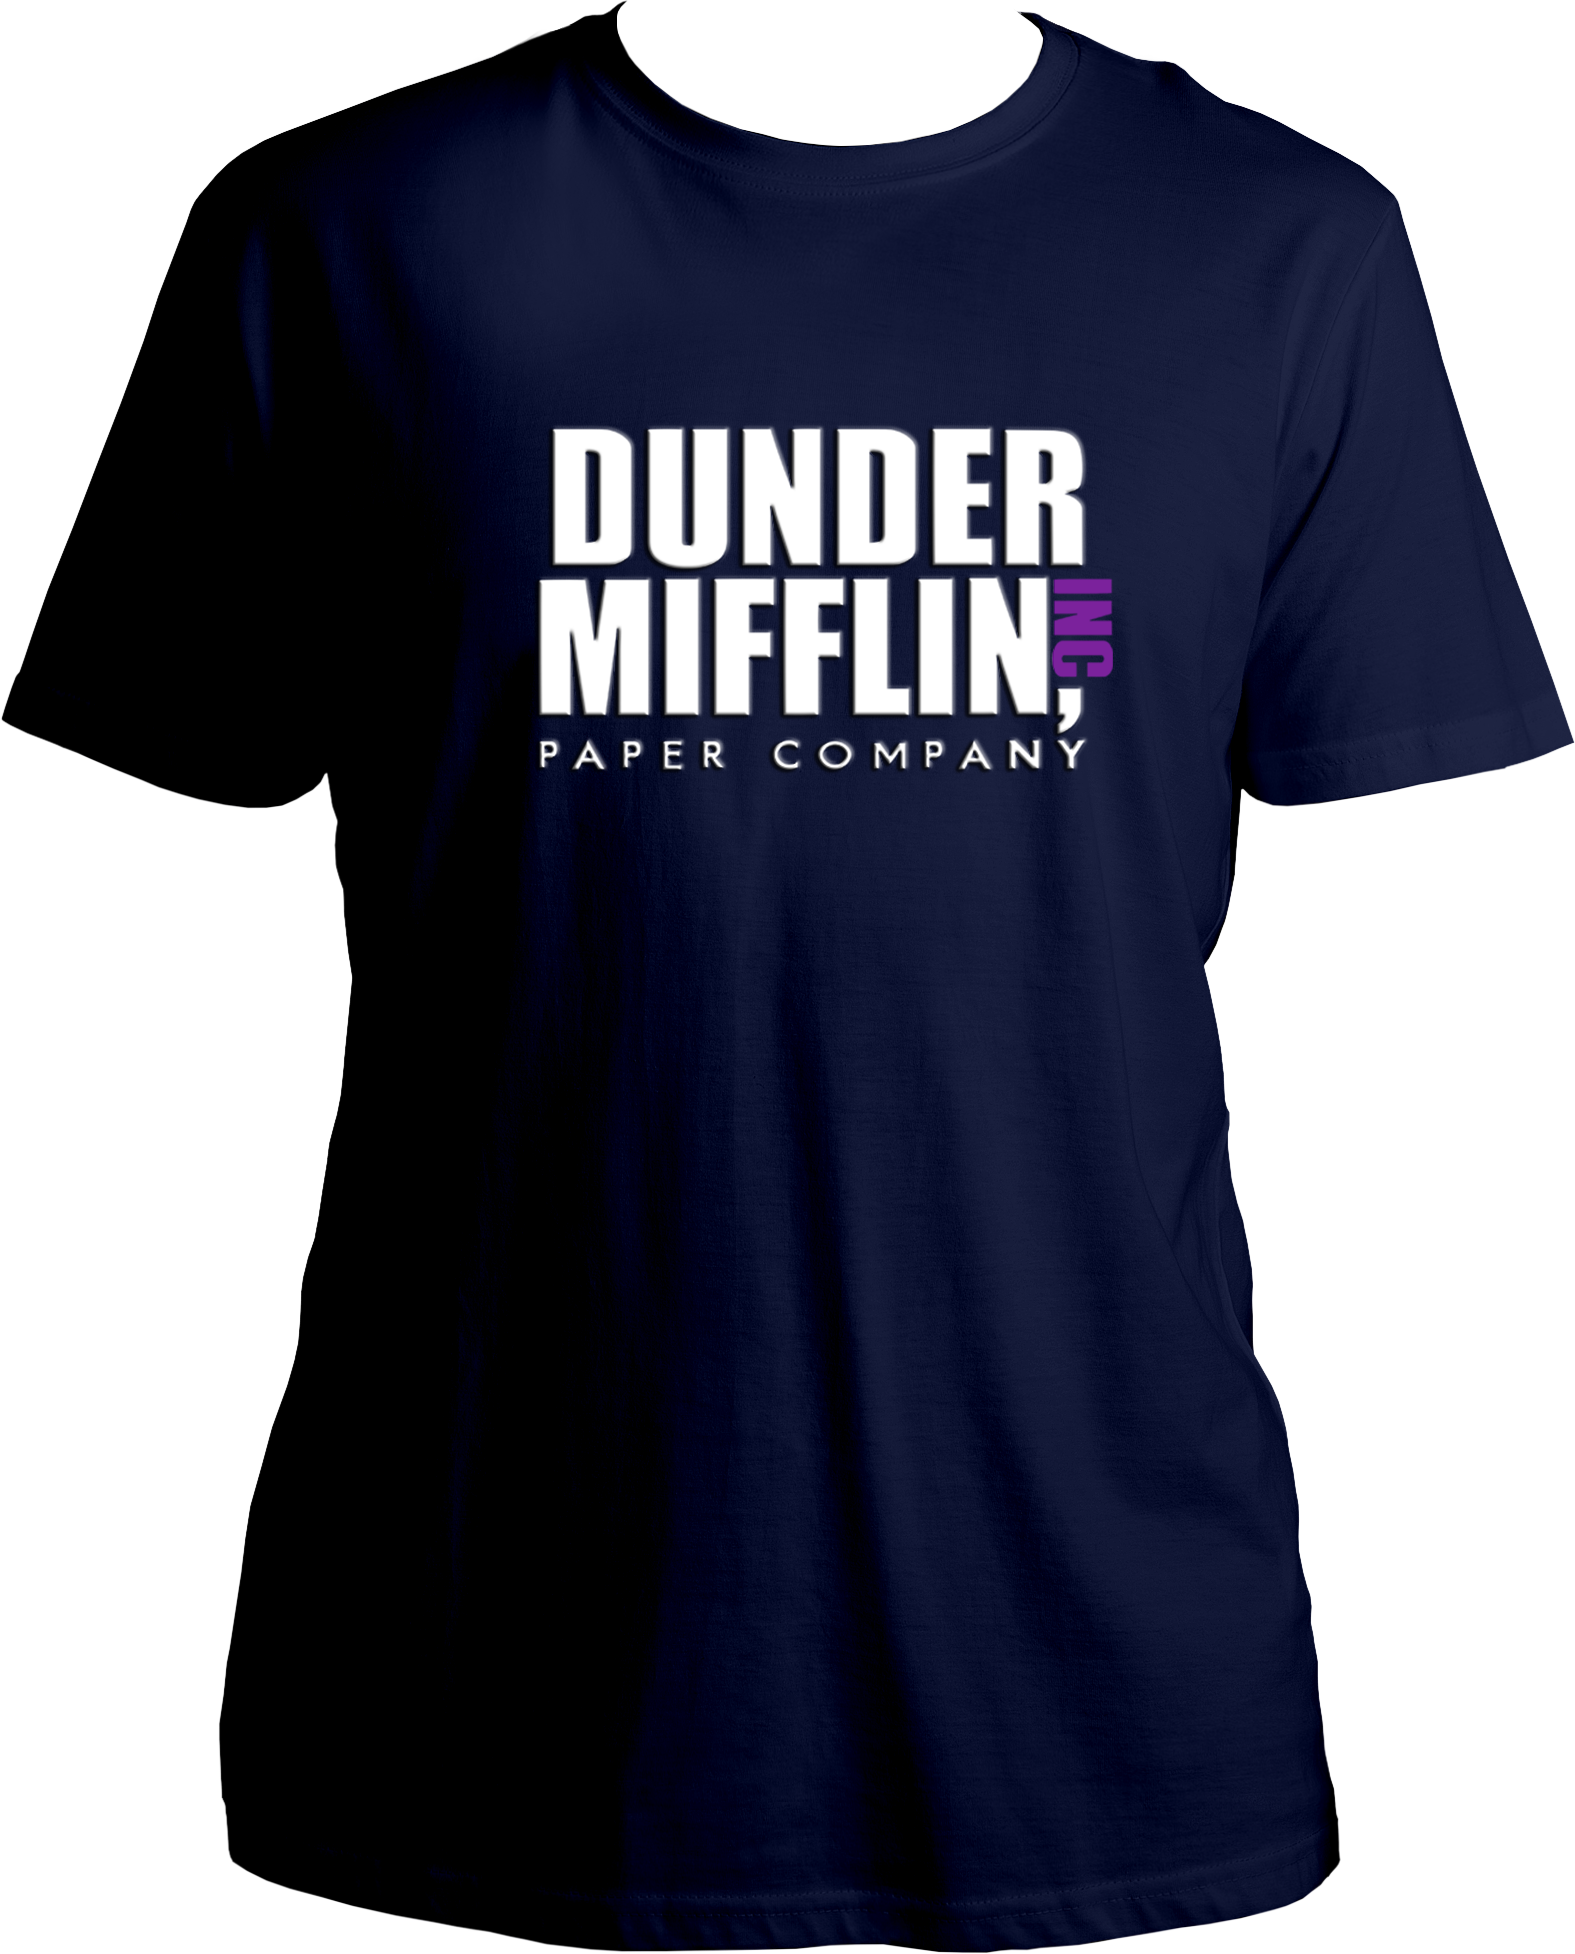 The Office Dunder Mifflin Inc Paper Company T-Shirt Medium